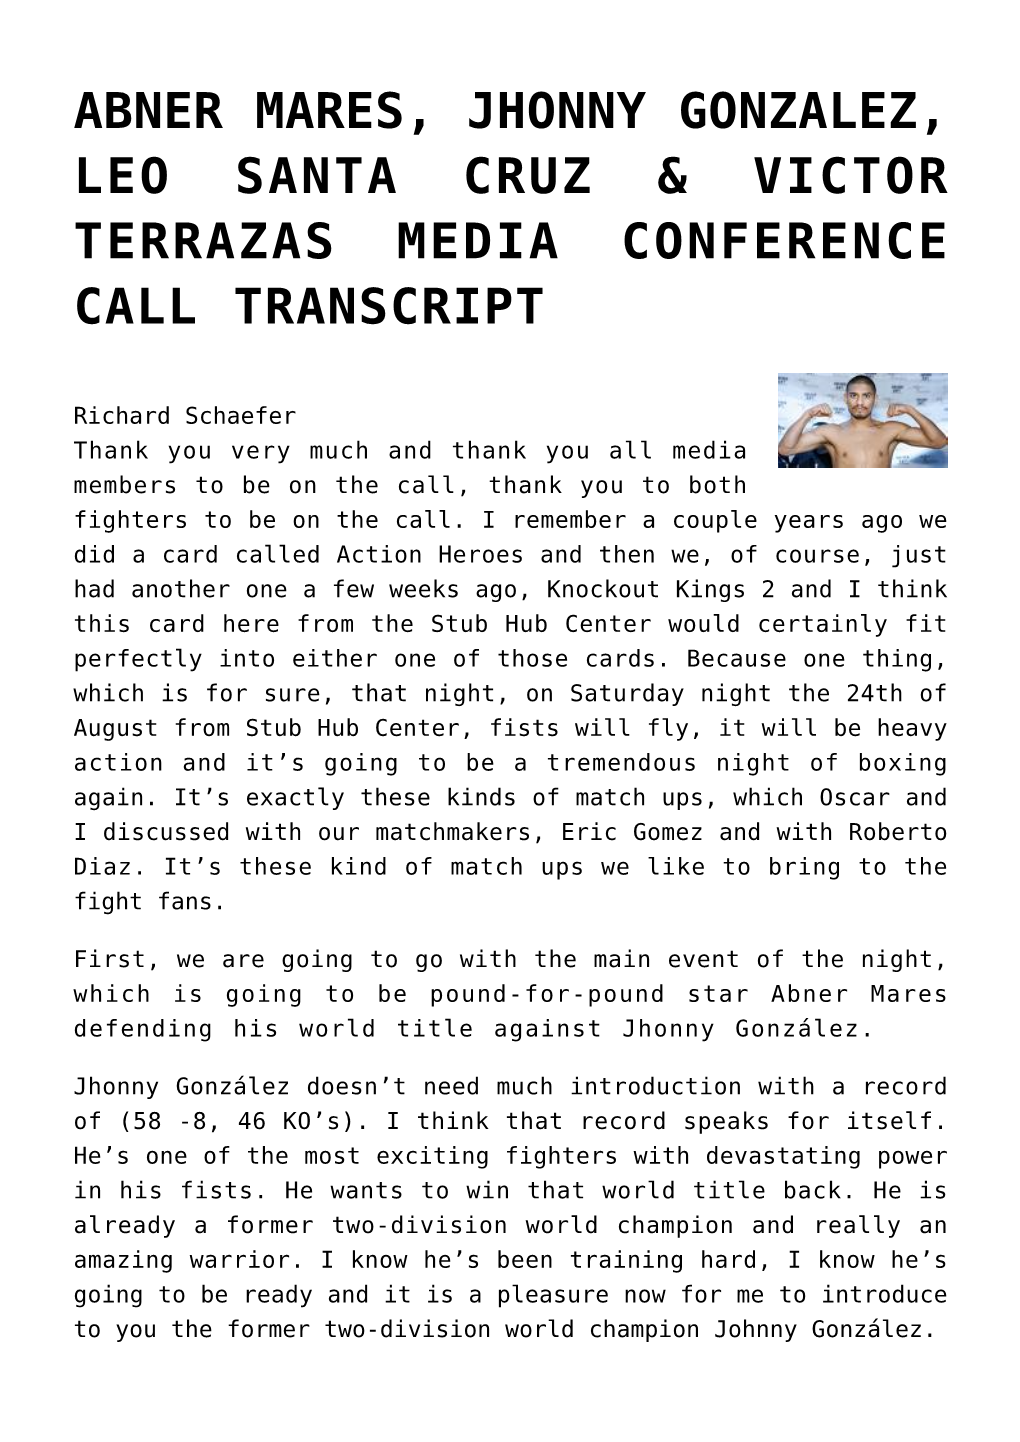 Abner Mares, Jhonny Gonzalez, Leo Santa Cruz & Victor Terrazas Media Conference Call Transcript